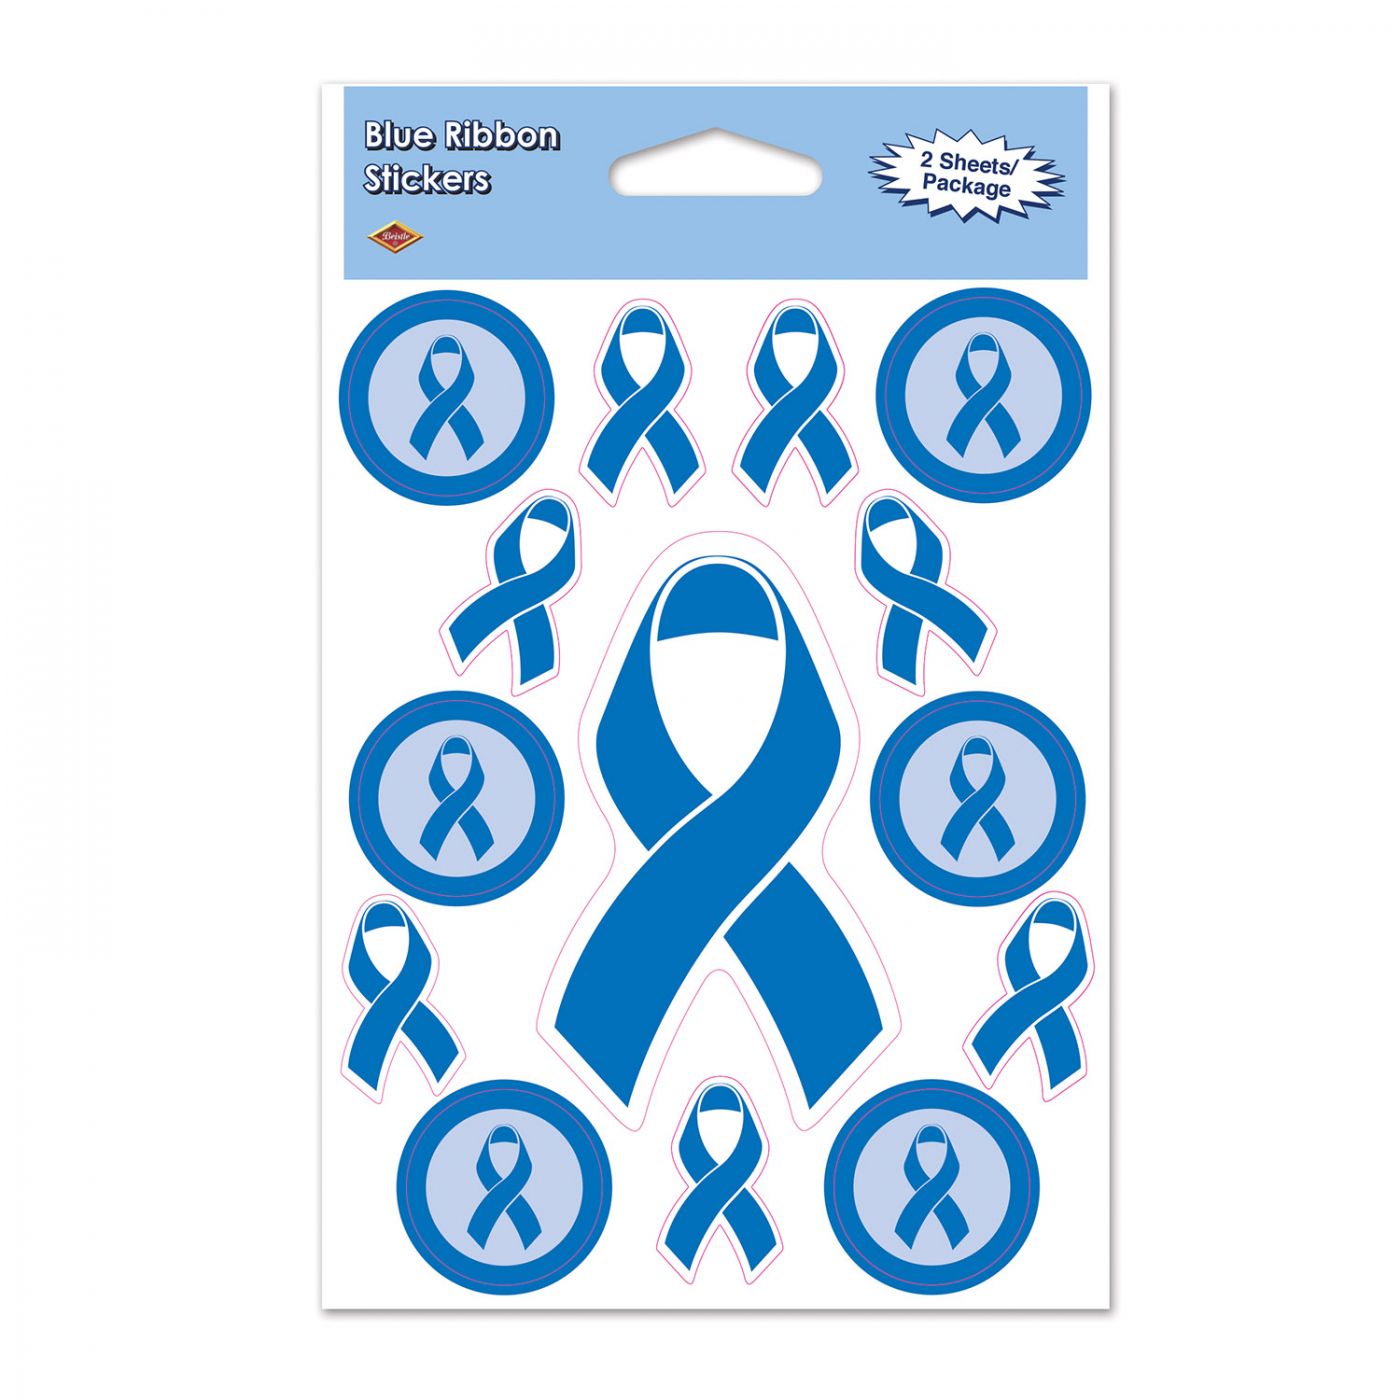 Blue Ribbon Stickers image